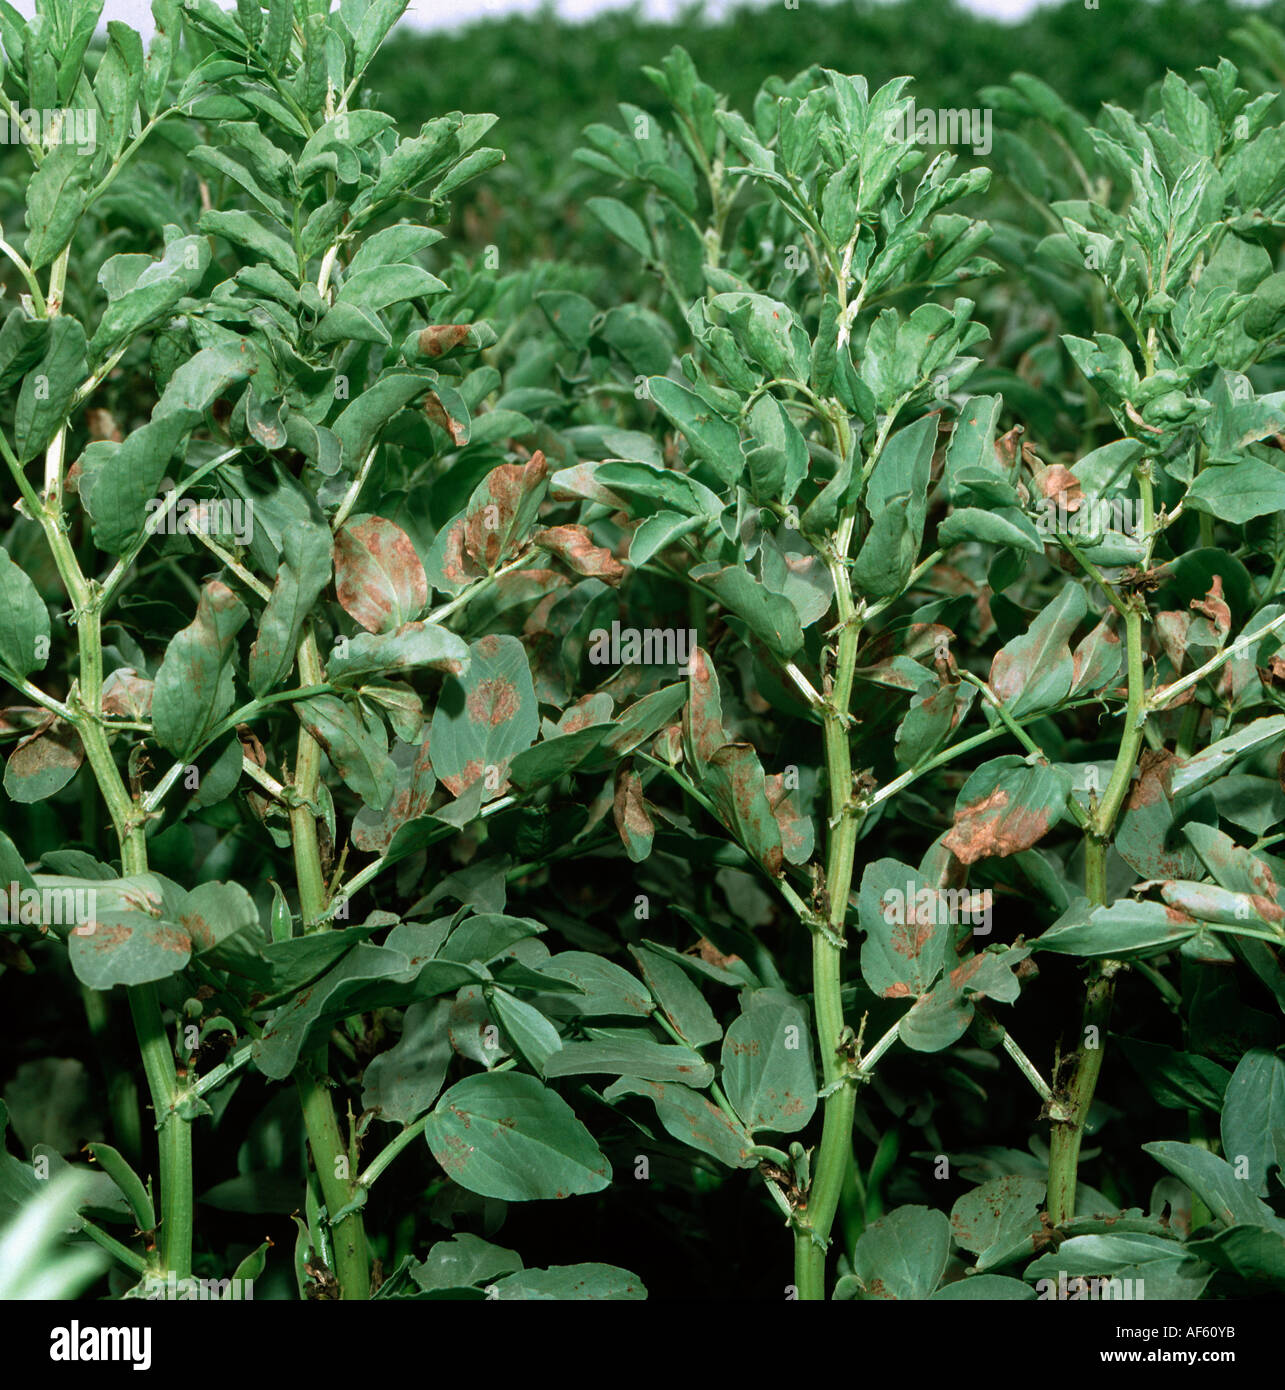 Downy mildew Peronospora viciae lesions on Vicia bean leaves Stock Photo